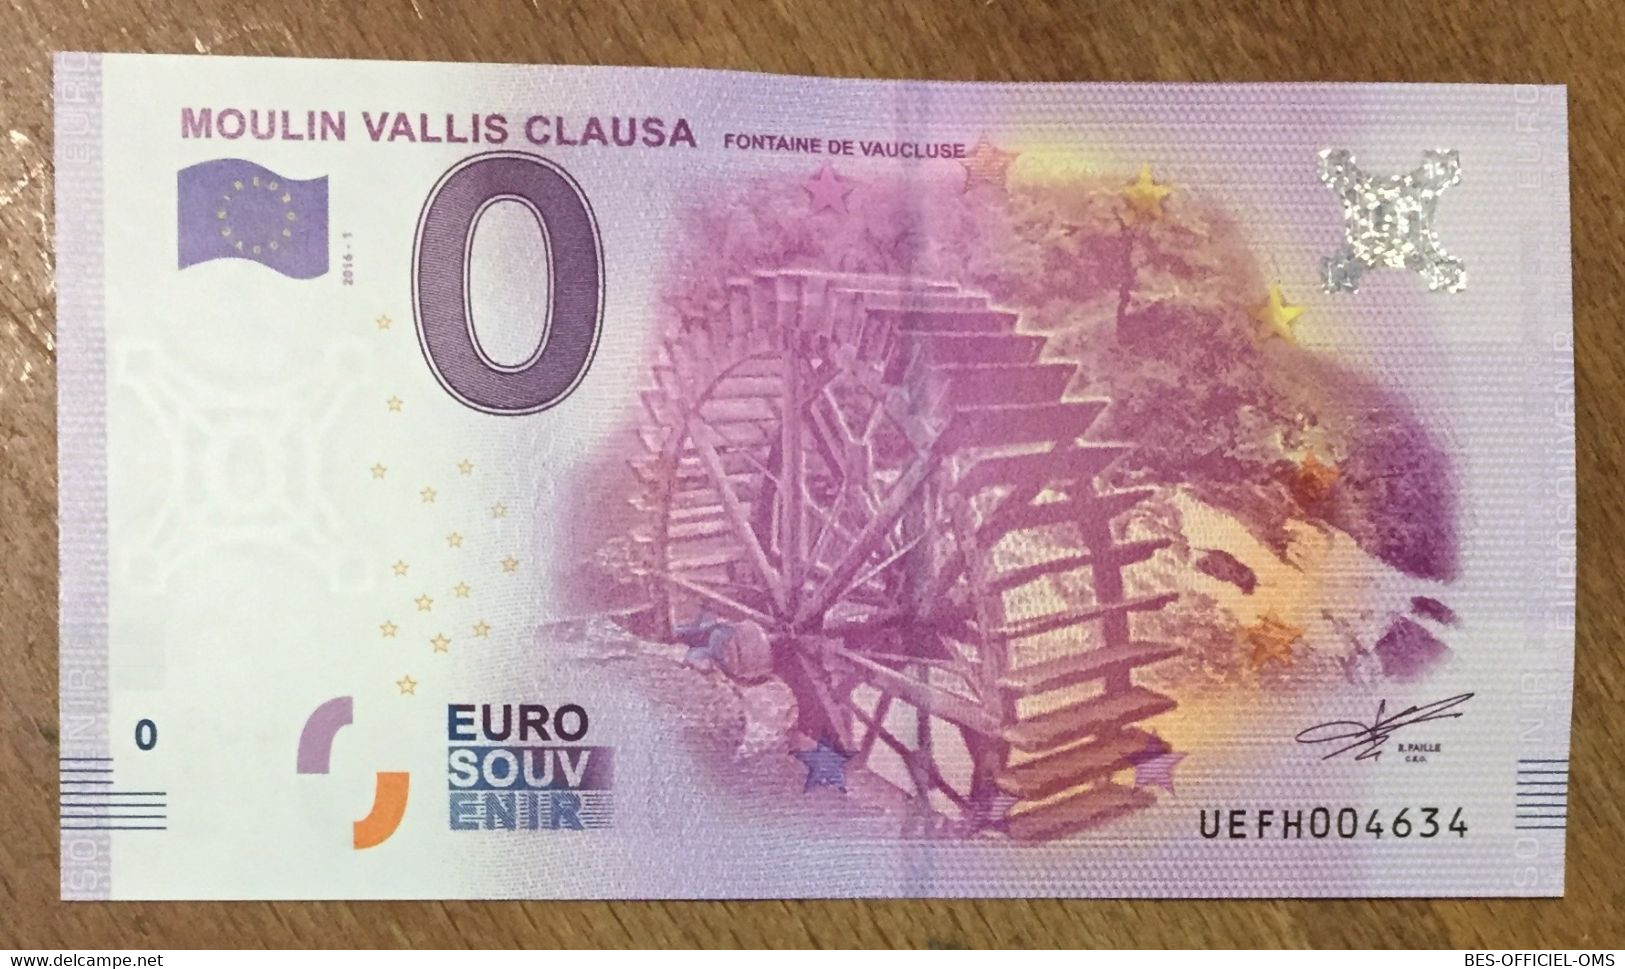 2016 BILLET 0 EURO SOUVENIR DPT 84 MOULIN VALLIS CLAUSA ZERO 0 EURO SCHEIN BANKNOTE PAPER MONEY - Private Proofs / Unofficial